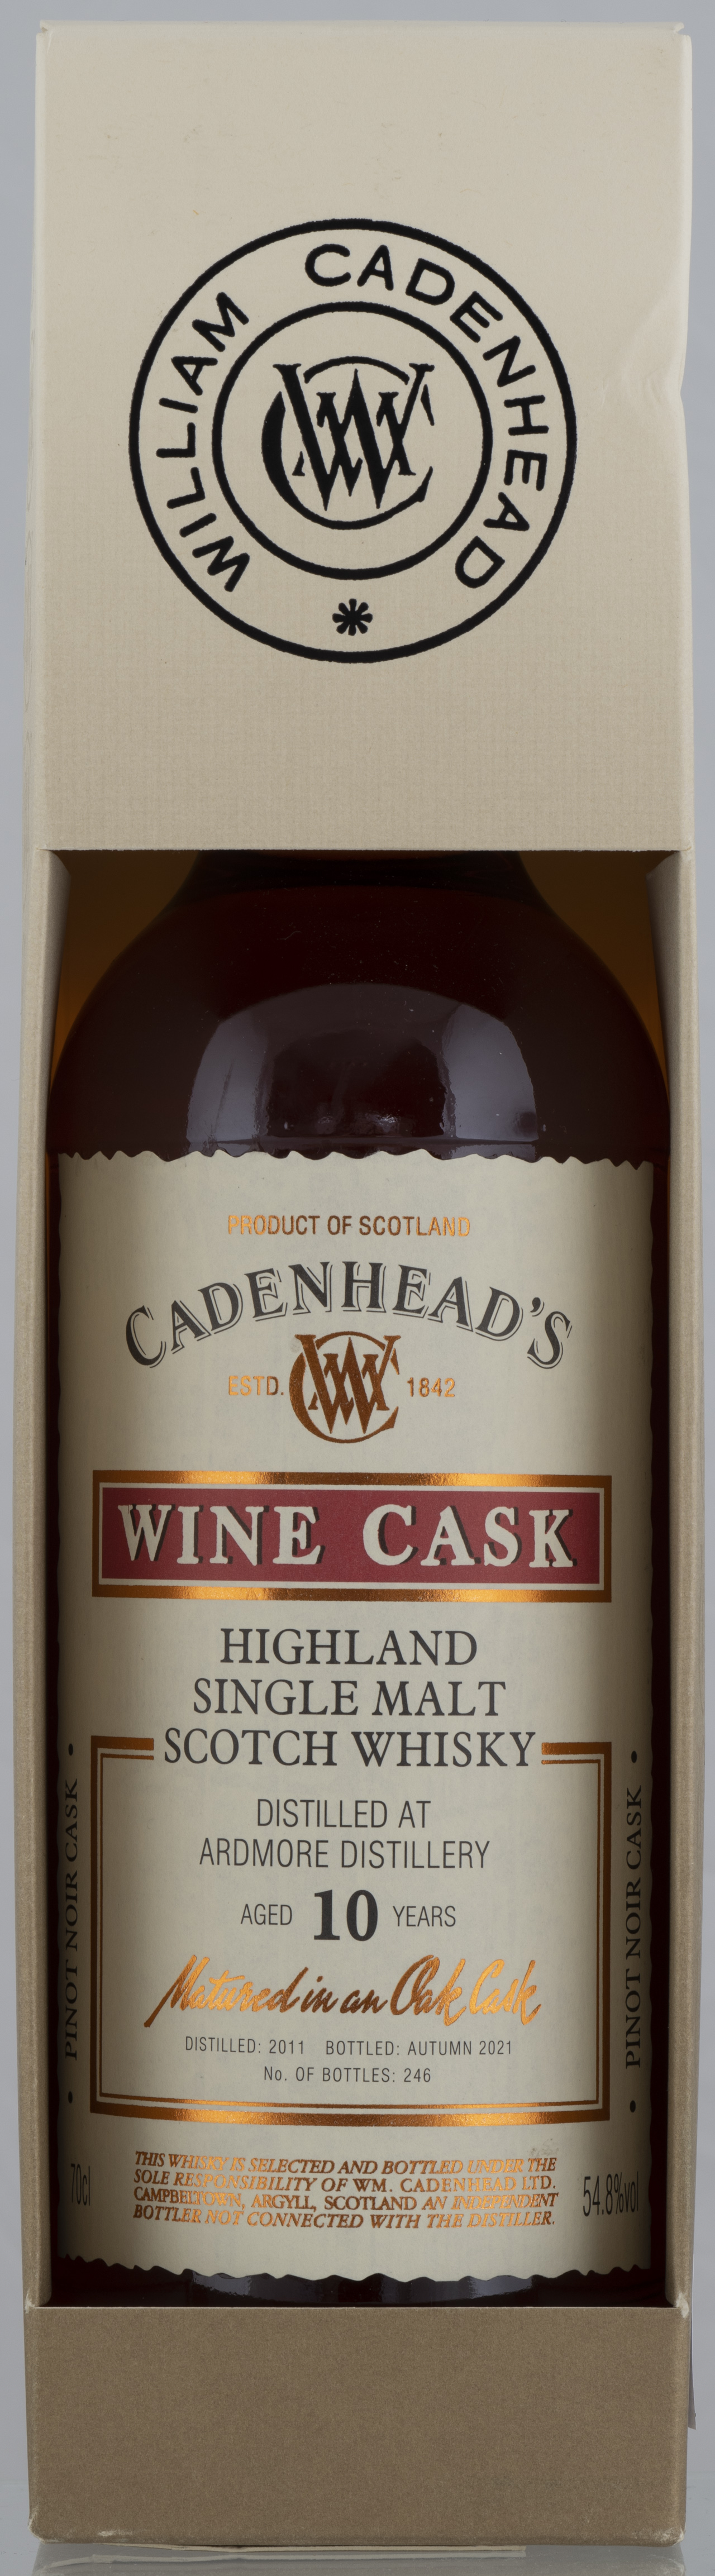 Billede: PHC_7264 - Cadenhead Wine Cask 10 year Ardmore - box front.jpg